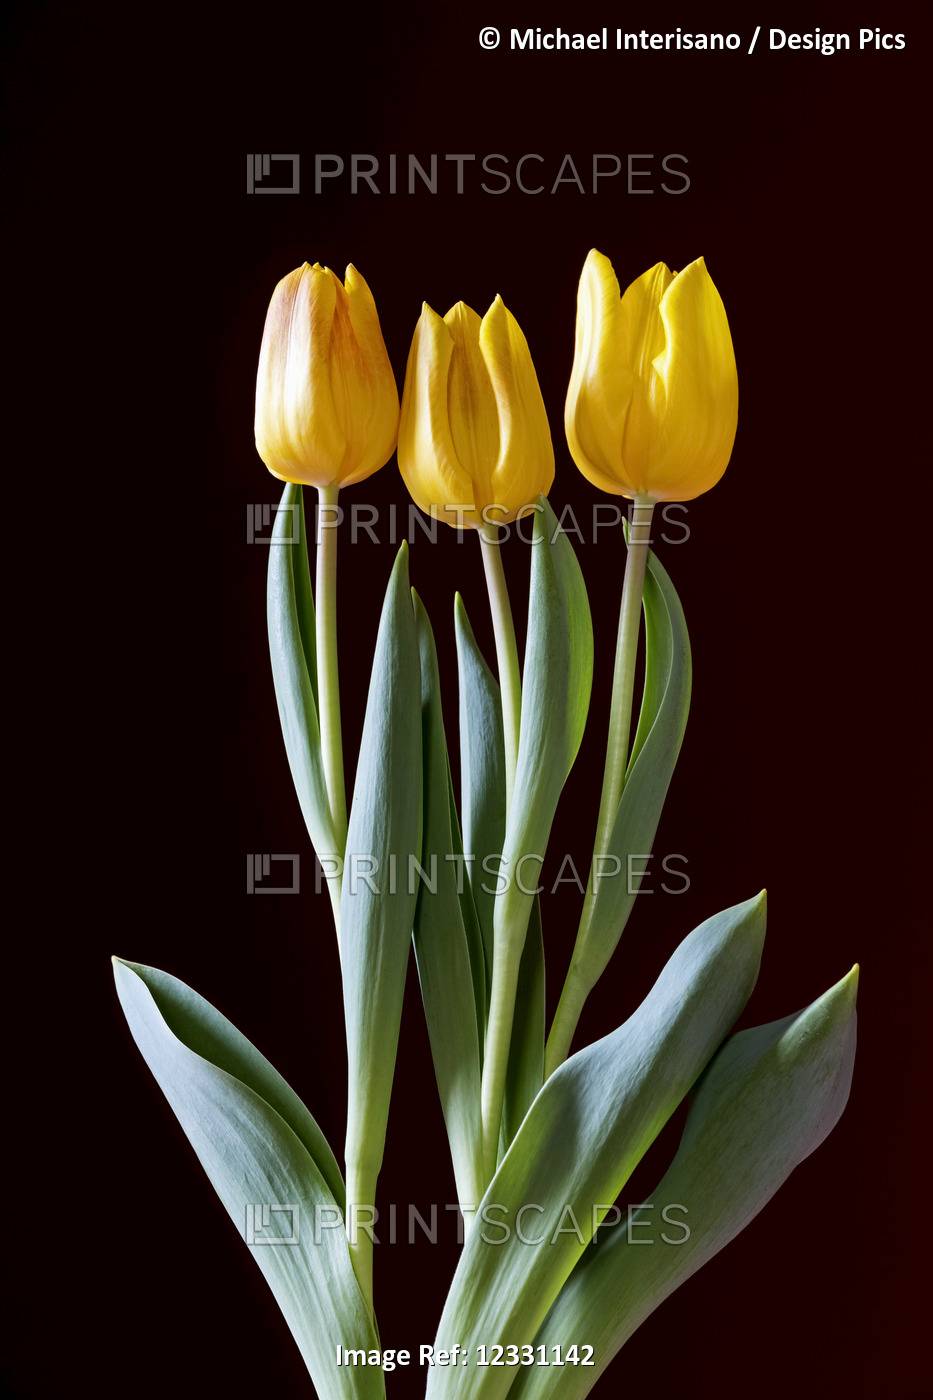 Yellow Tulips Against A Black Background; Calgary, Alberta, Canada